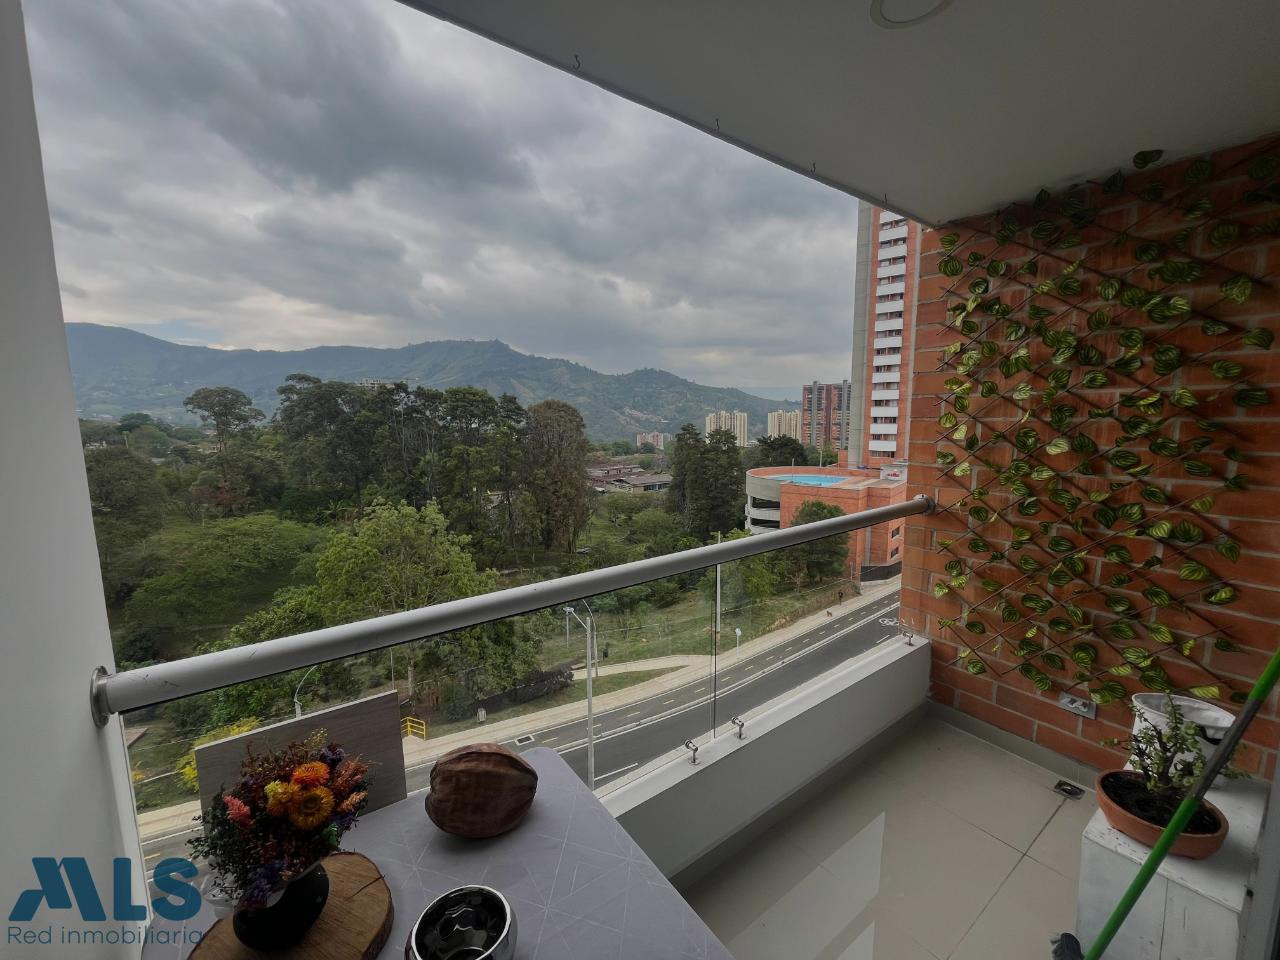 Apartamento en sector de alta valorizacion itagui - suramerica